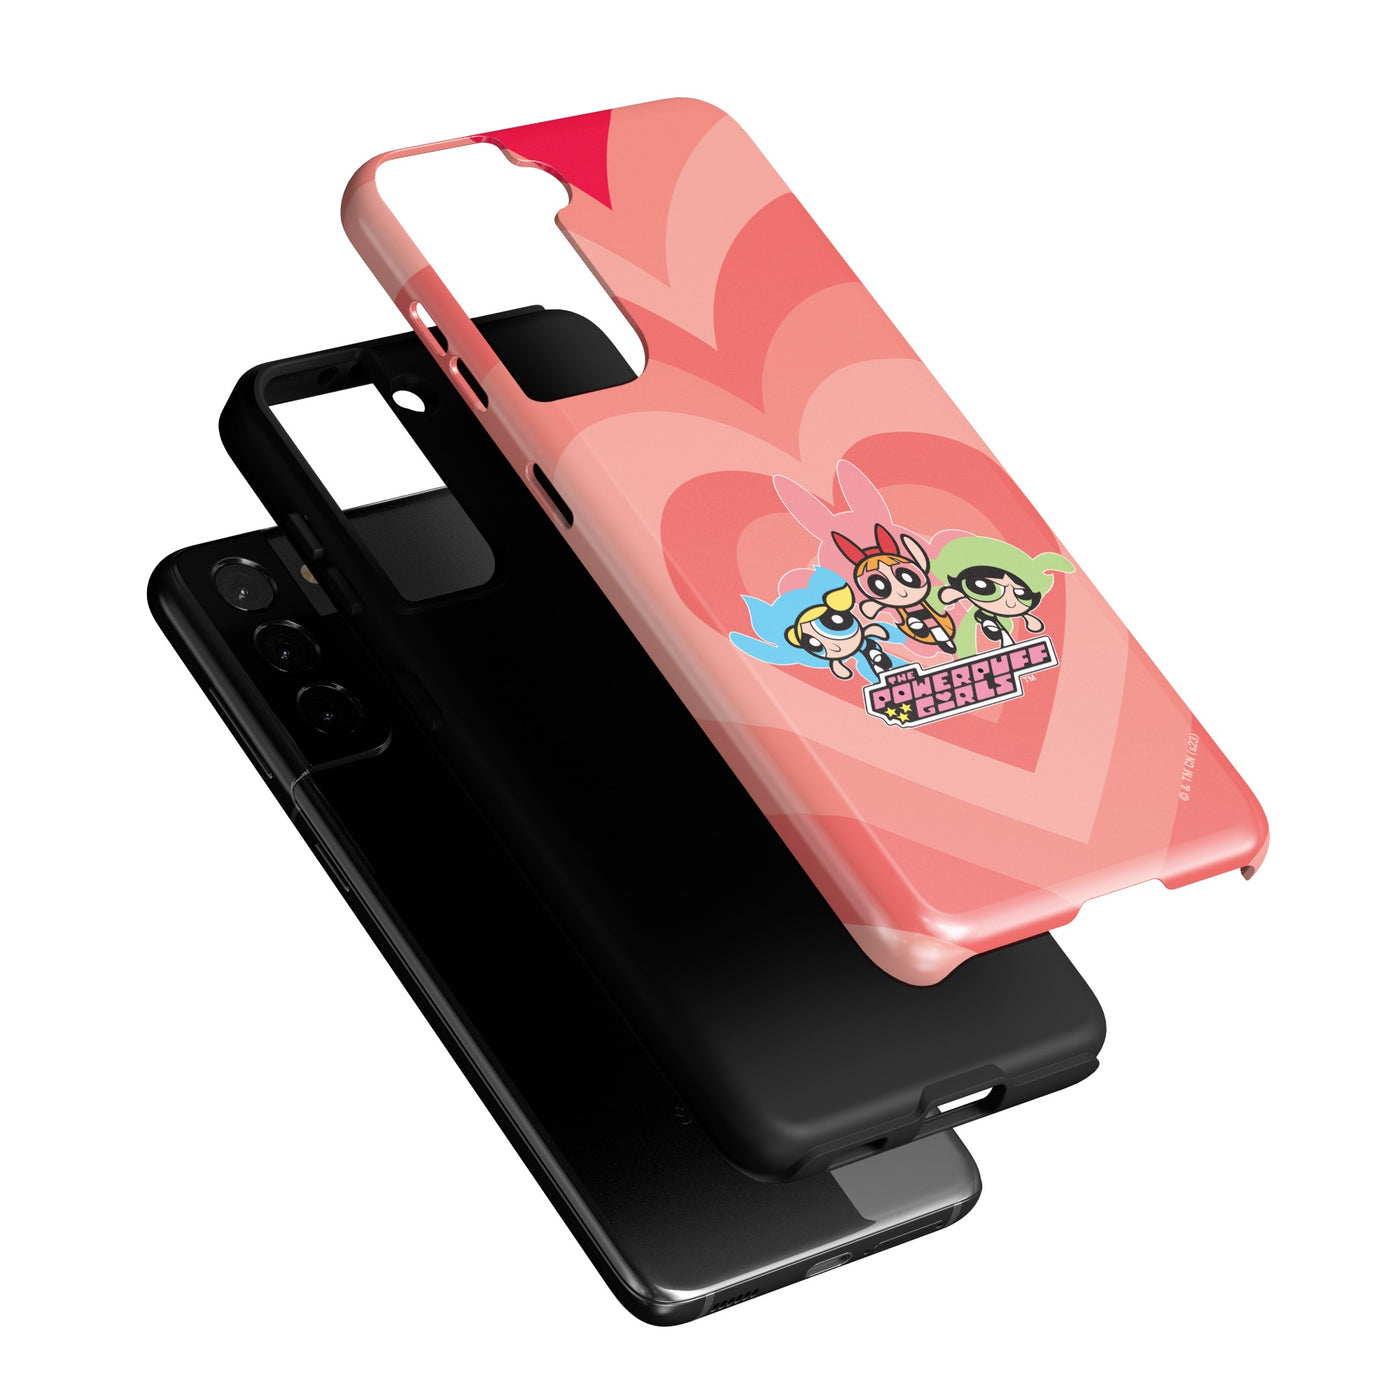 The Powerpuff Girls Logo Tough Phone Case